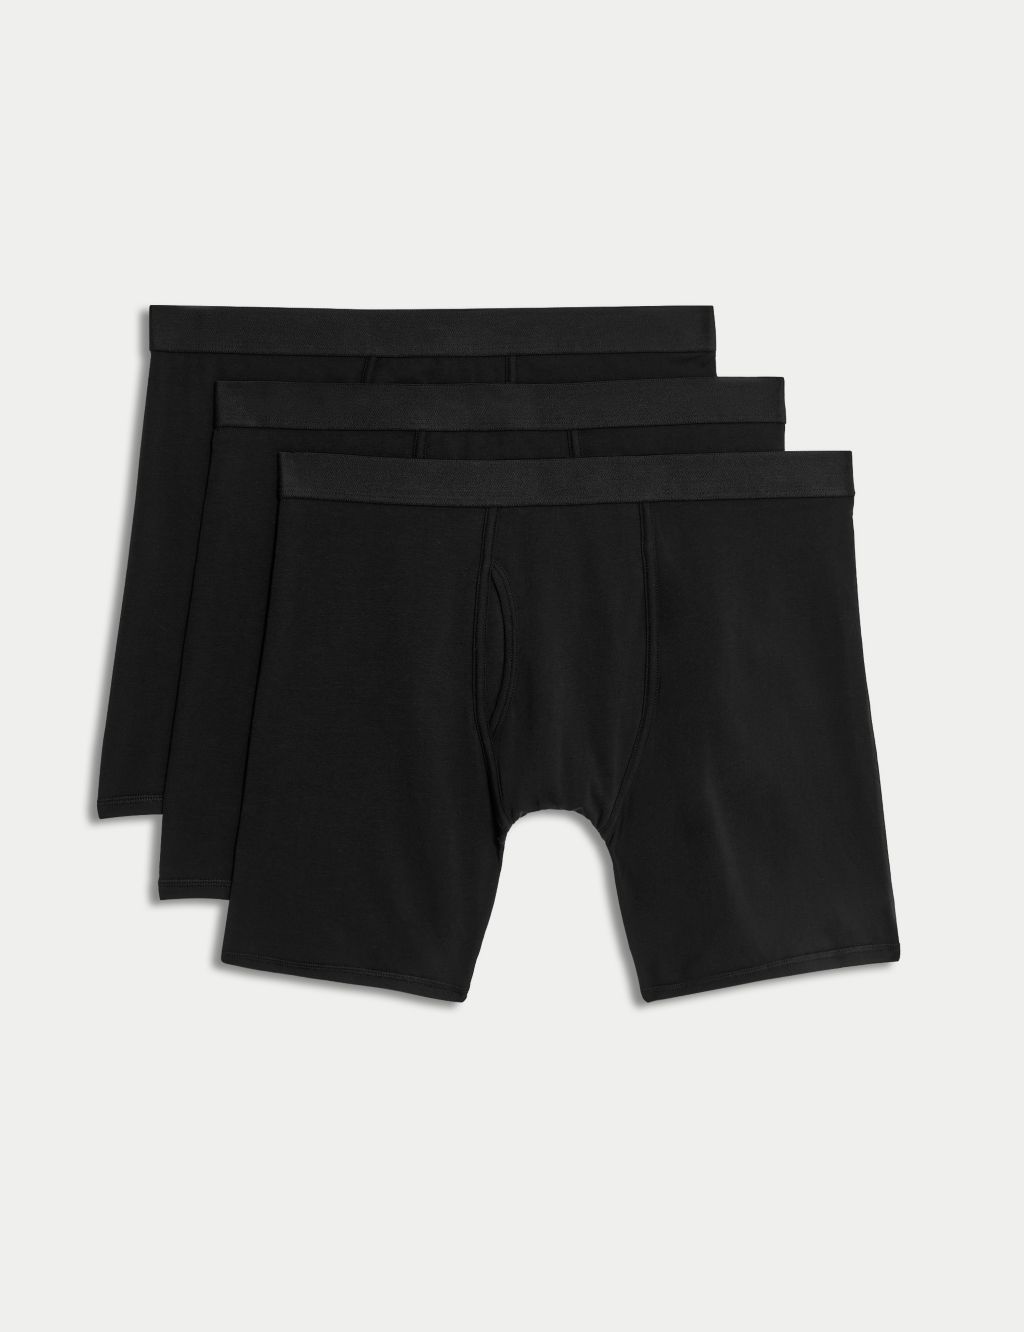 GIERIDUC Mens Dual Pouch Elephant Underwear Trunk Designer Mens Bathing  Suits Best Underwear With Pouch Innerwear For Winter